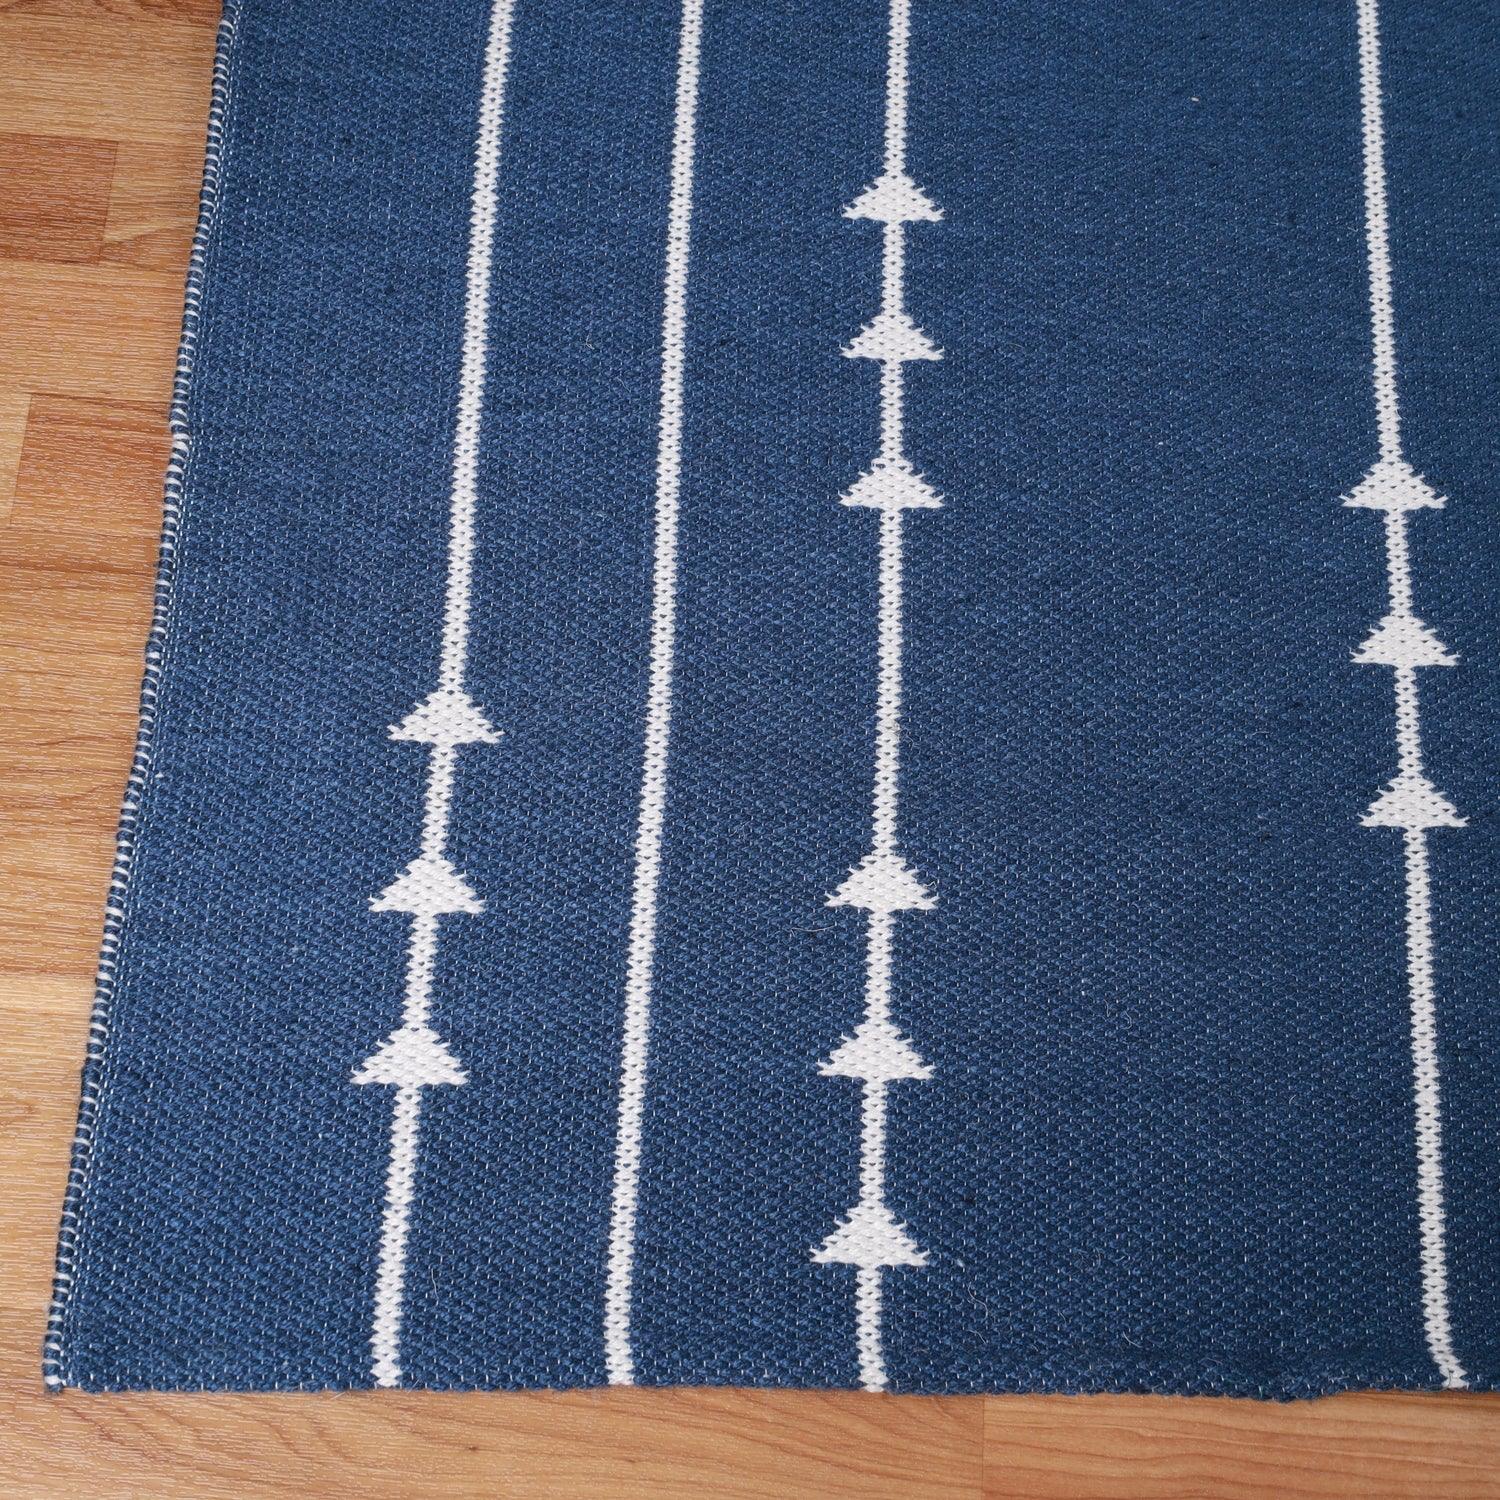  Superior Bohemian Arrow Line Pattern Indoor Outdoor Area Rug - Navy Blue